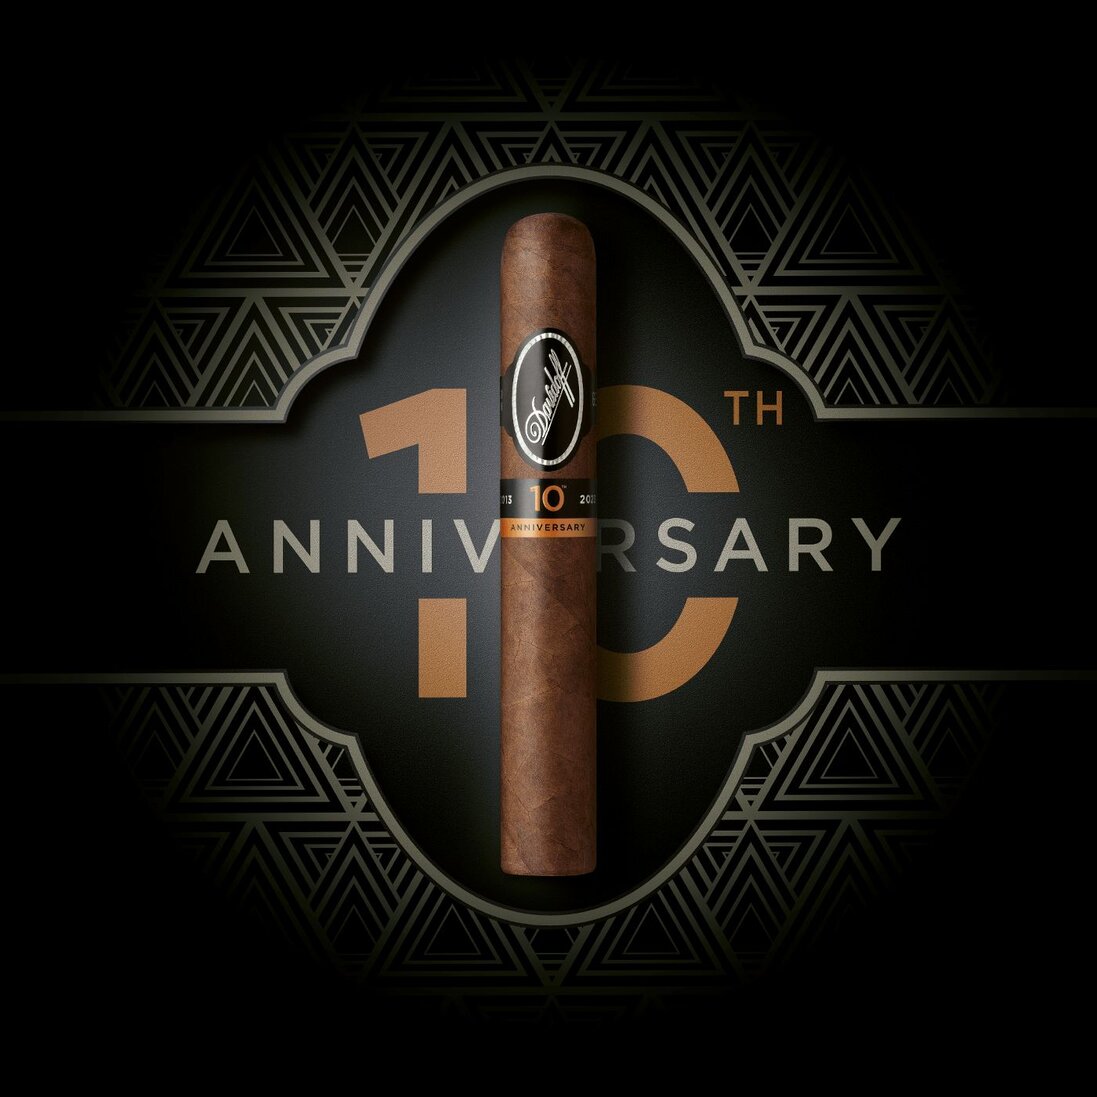 Bundle of Davidoff Signature No. 1 Limited Edition Cigars.